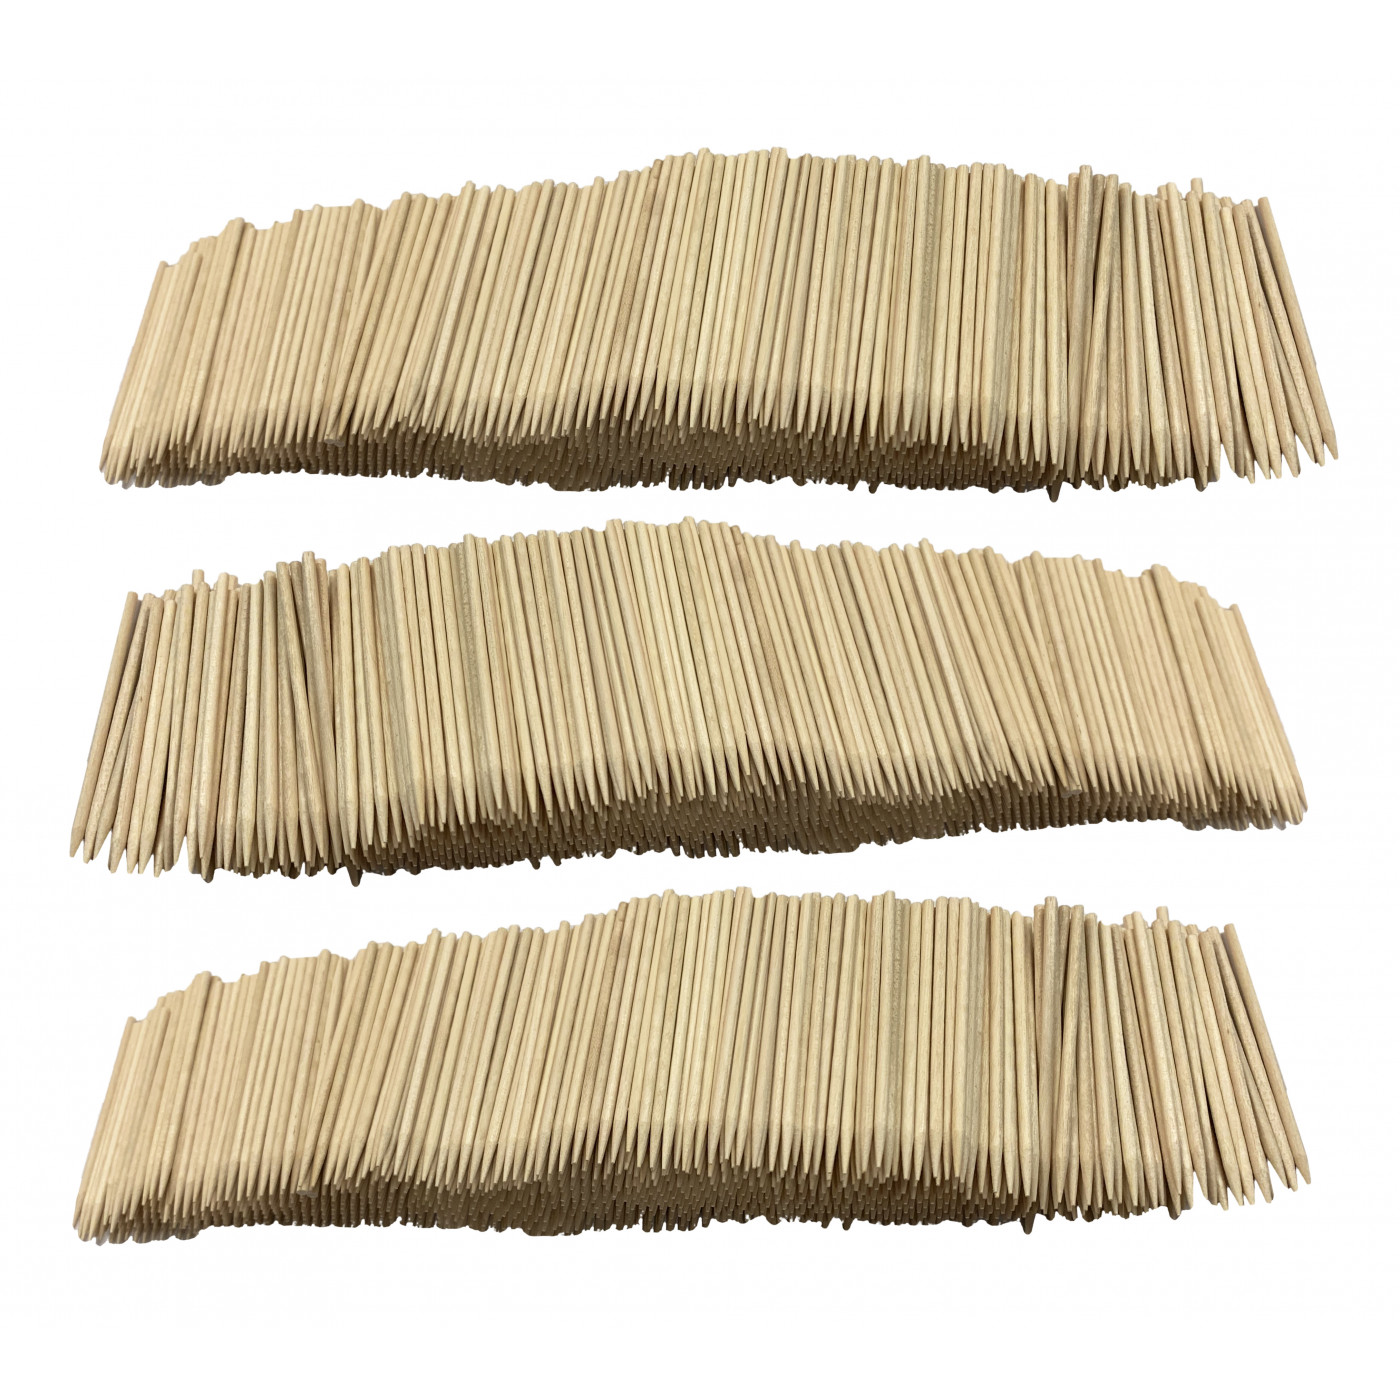 Set of 3000 wooden sticks (2.5 mm x 7 cm, pointed)